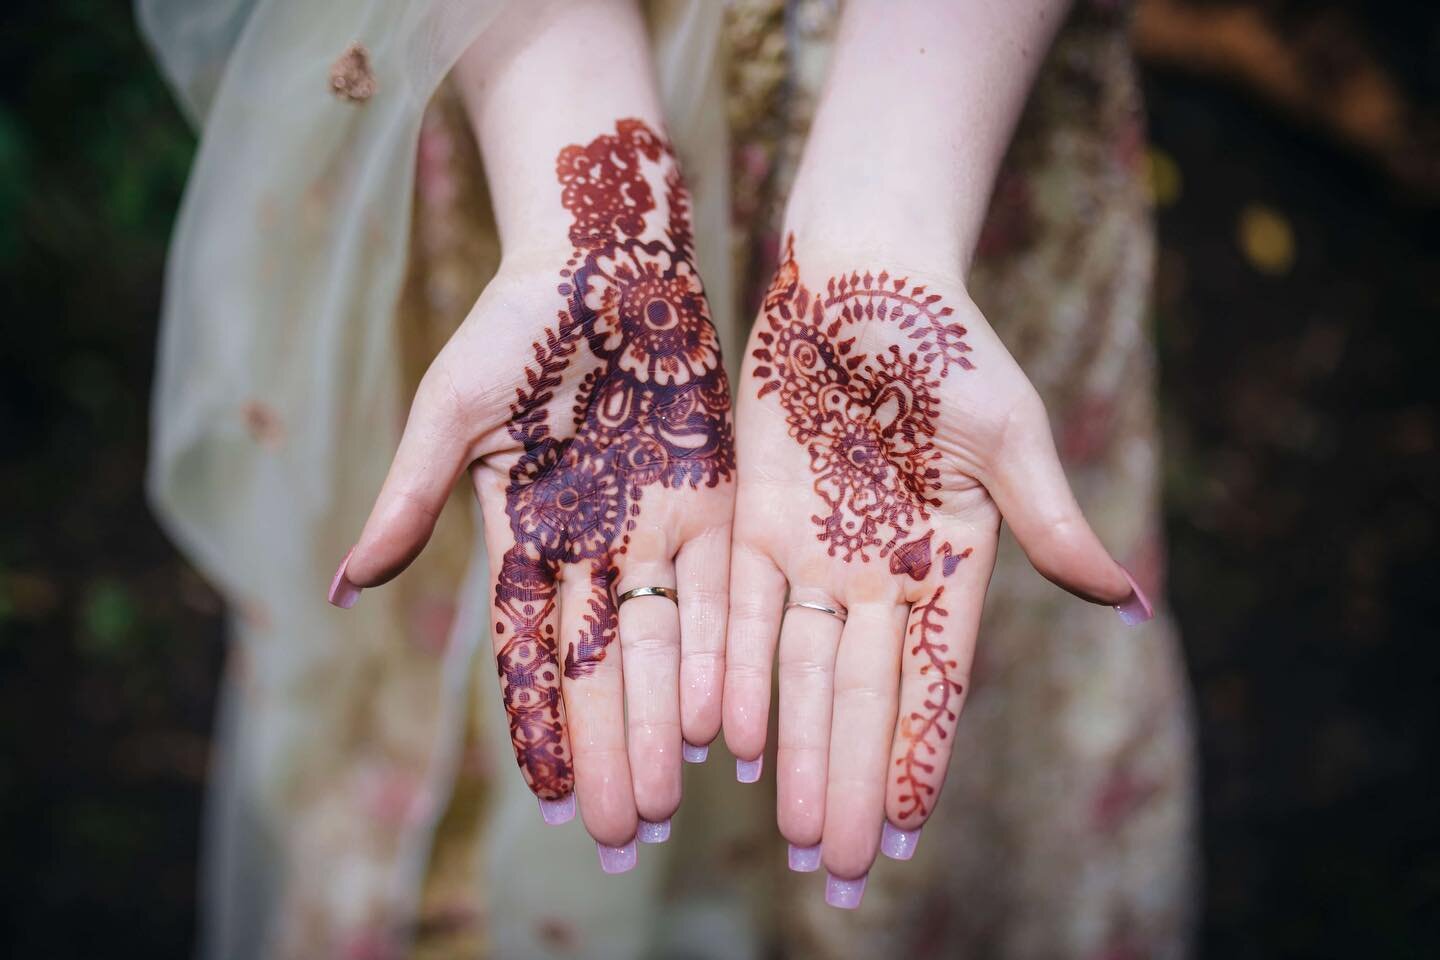 Henna ❤️
.
.
.
.
.
@lucyrcrouch @aucklandweddings 
#henna #weddinghenna #indianwedding #aucklandweddingphotographer #southaucklandweddingphotographer #hennatattoo #hennahands #bride #nikonnz @nikonnz